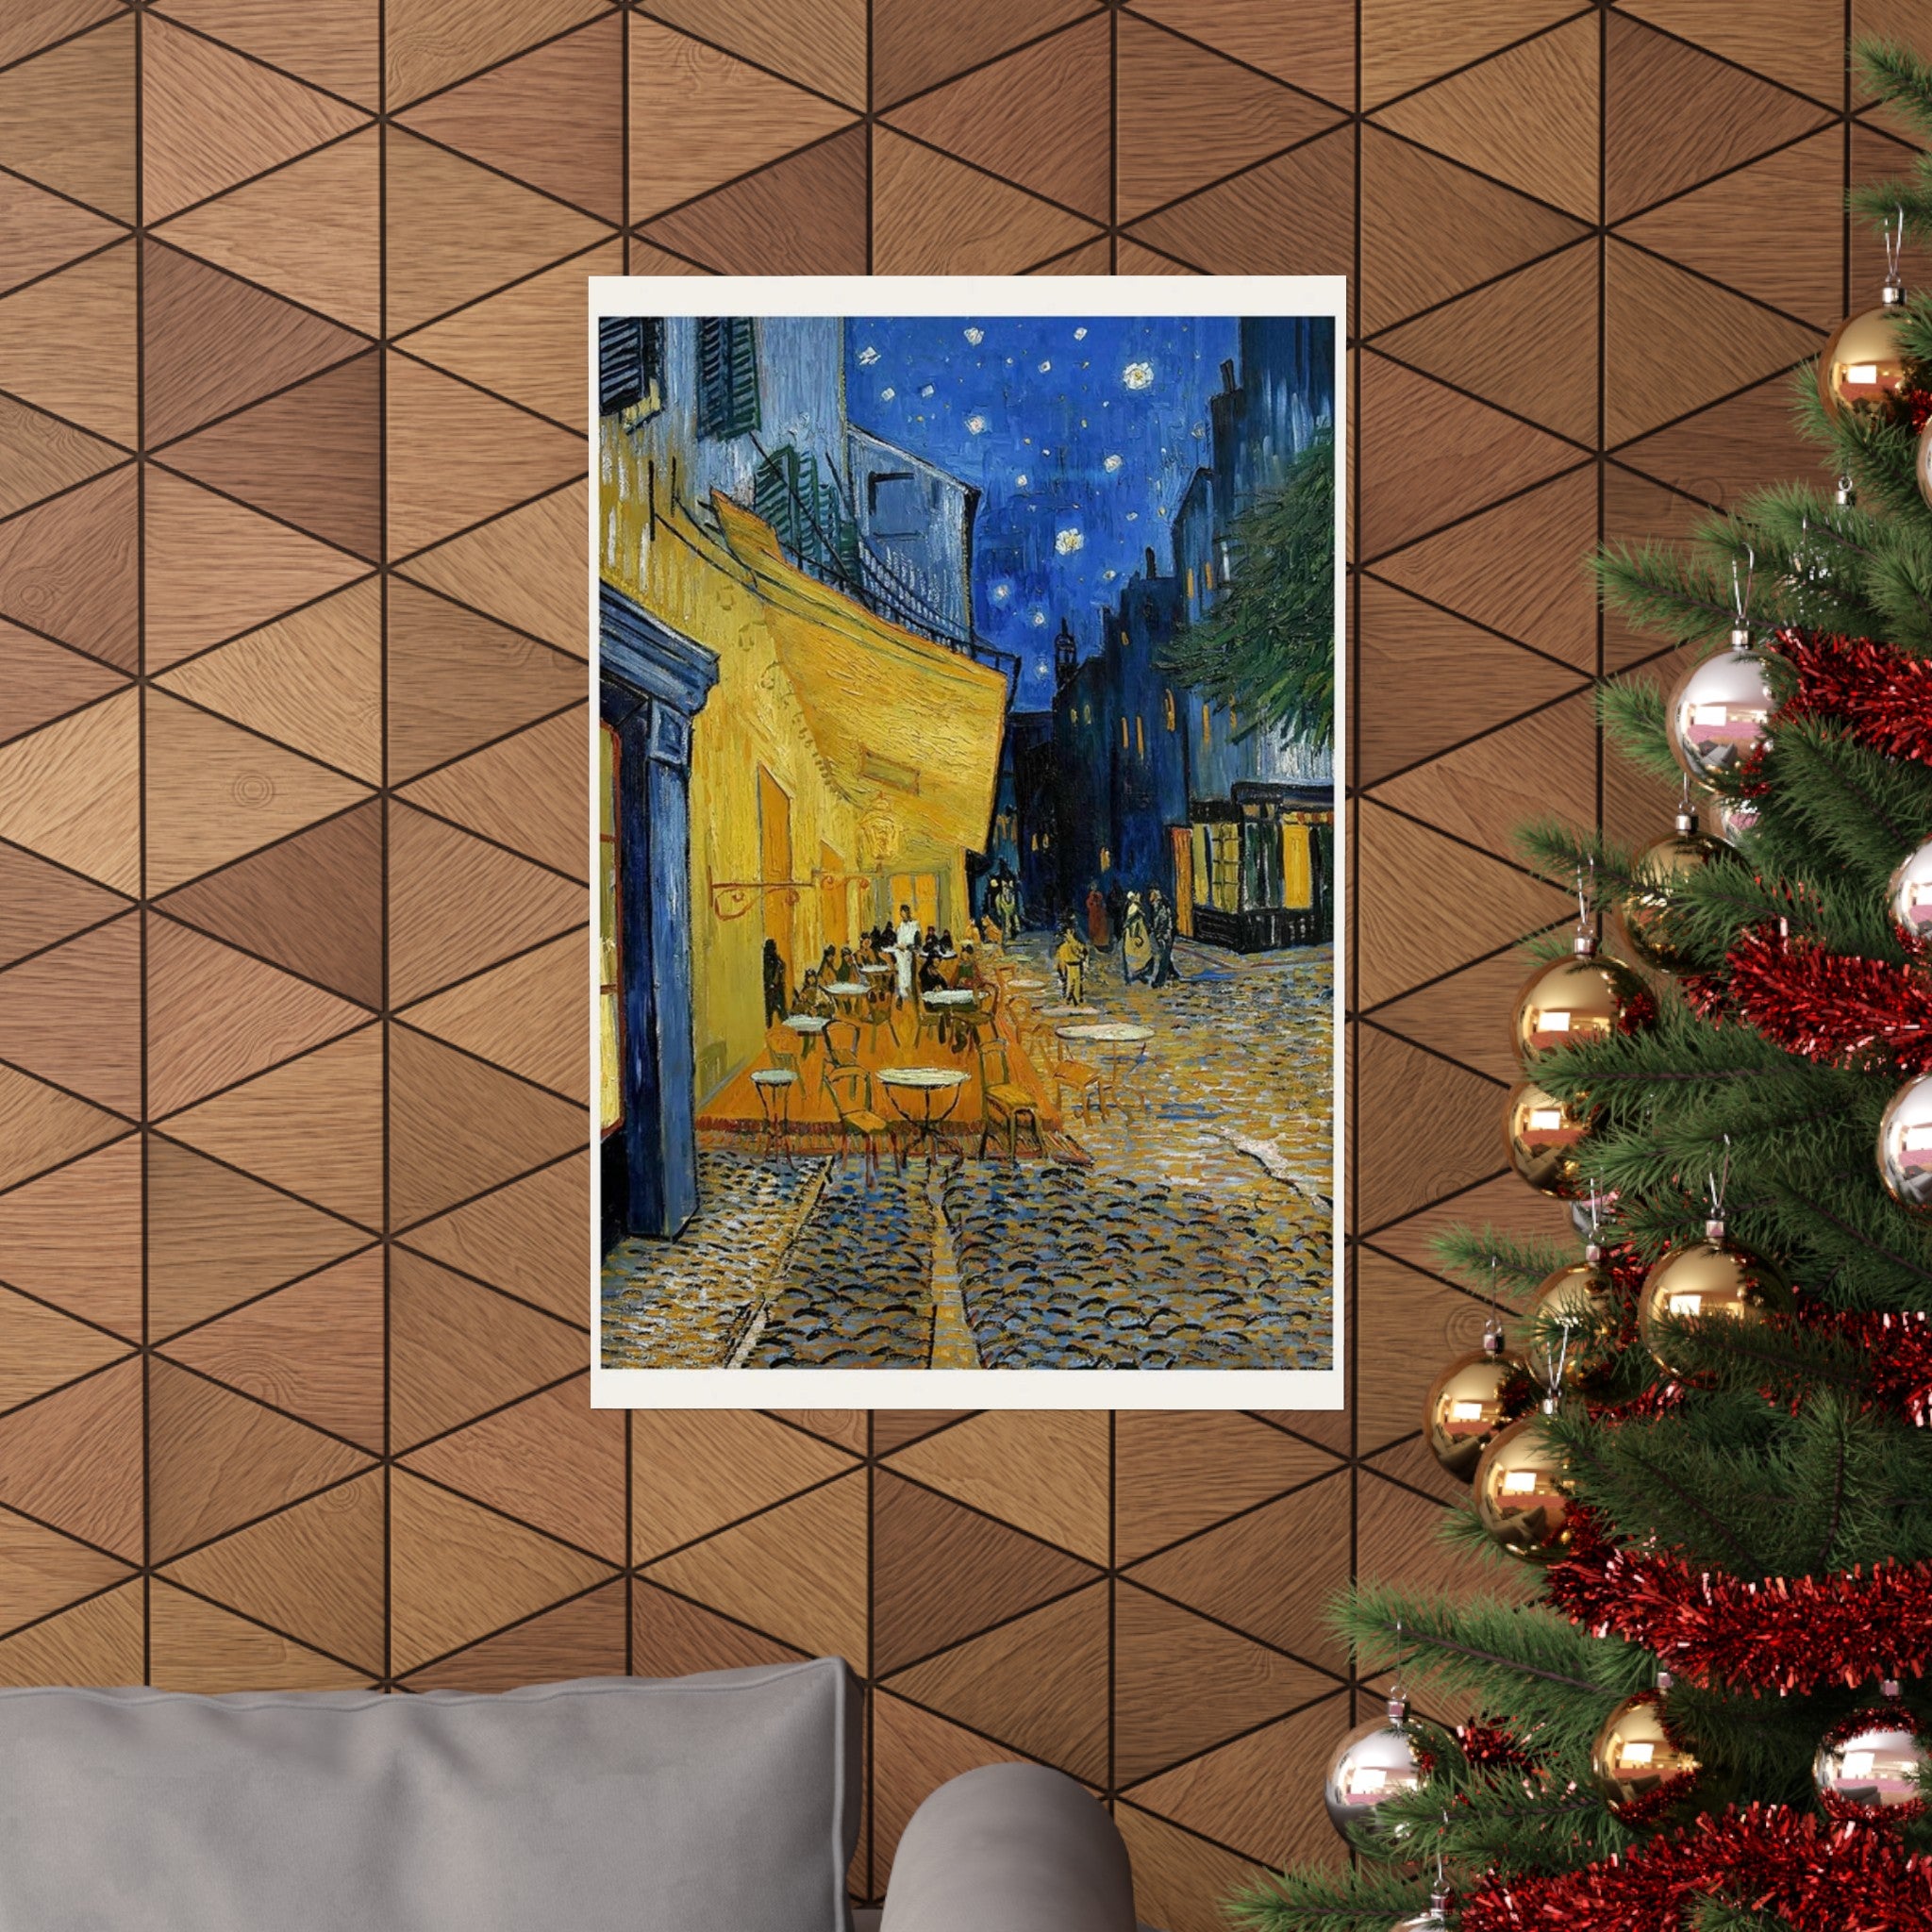 Van Gogh Cafe Terrace at Night Wall Print | Poster | Vincent Van Gogh | Post Impressionism | Painting